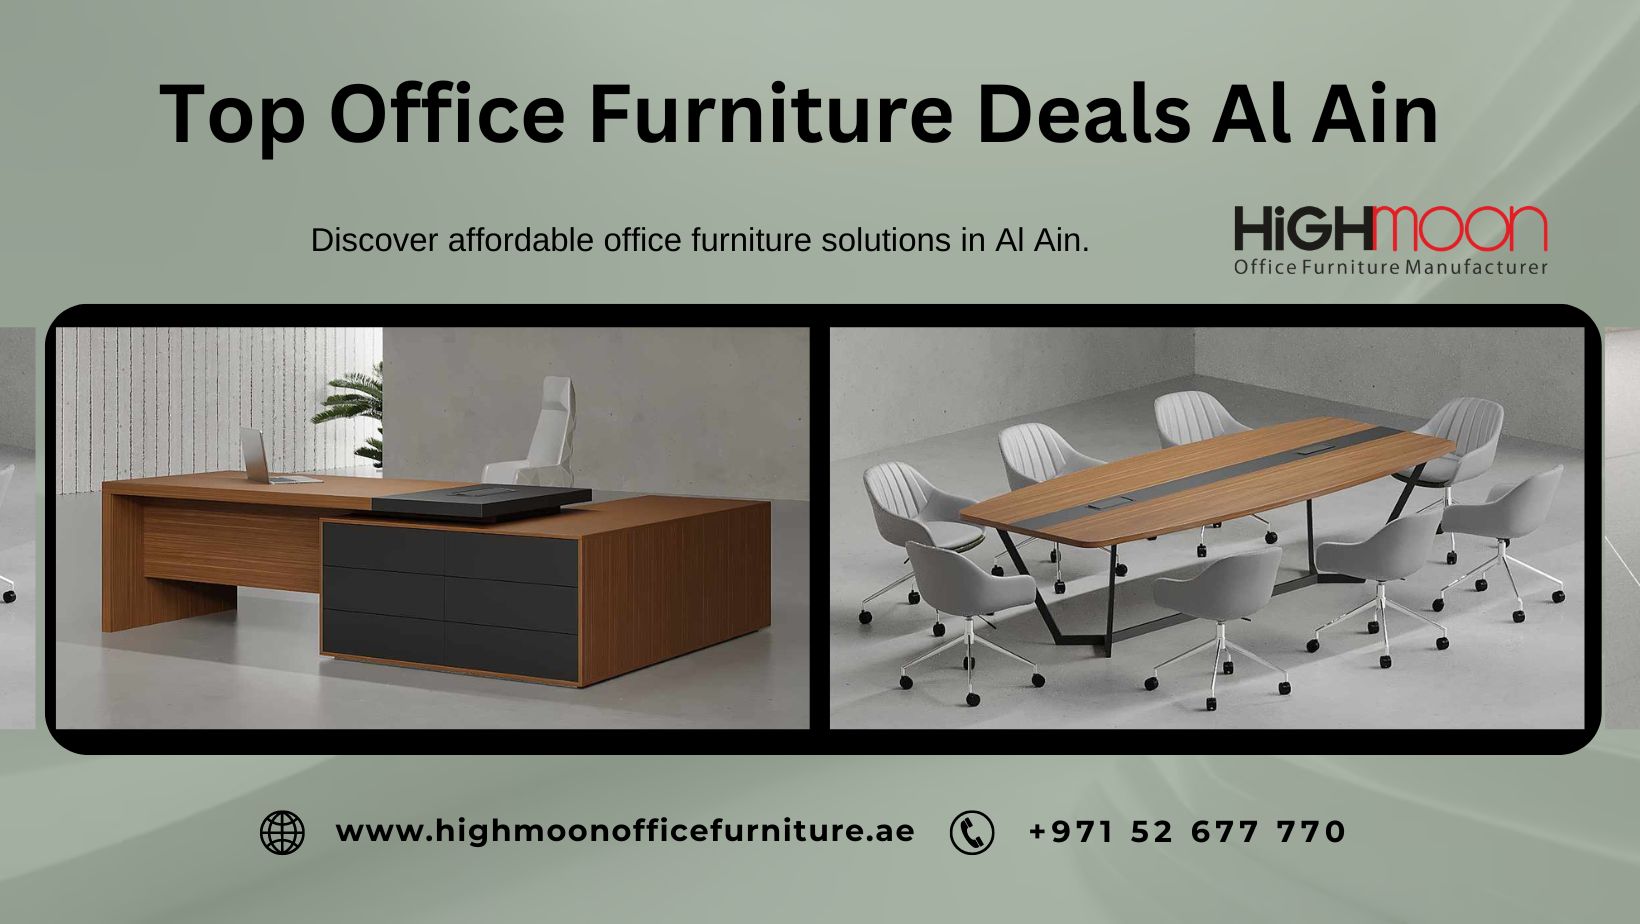 Top Office Furniture Dealers in Al Ain